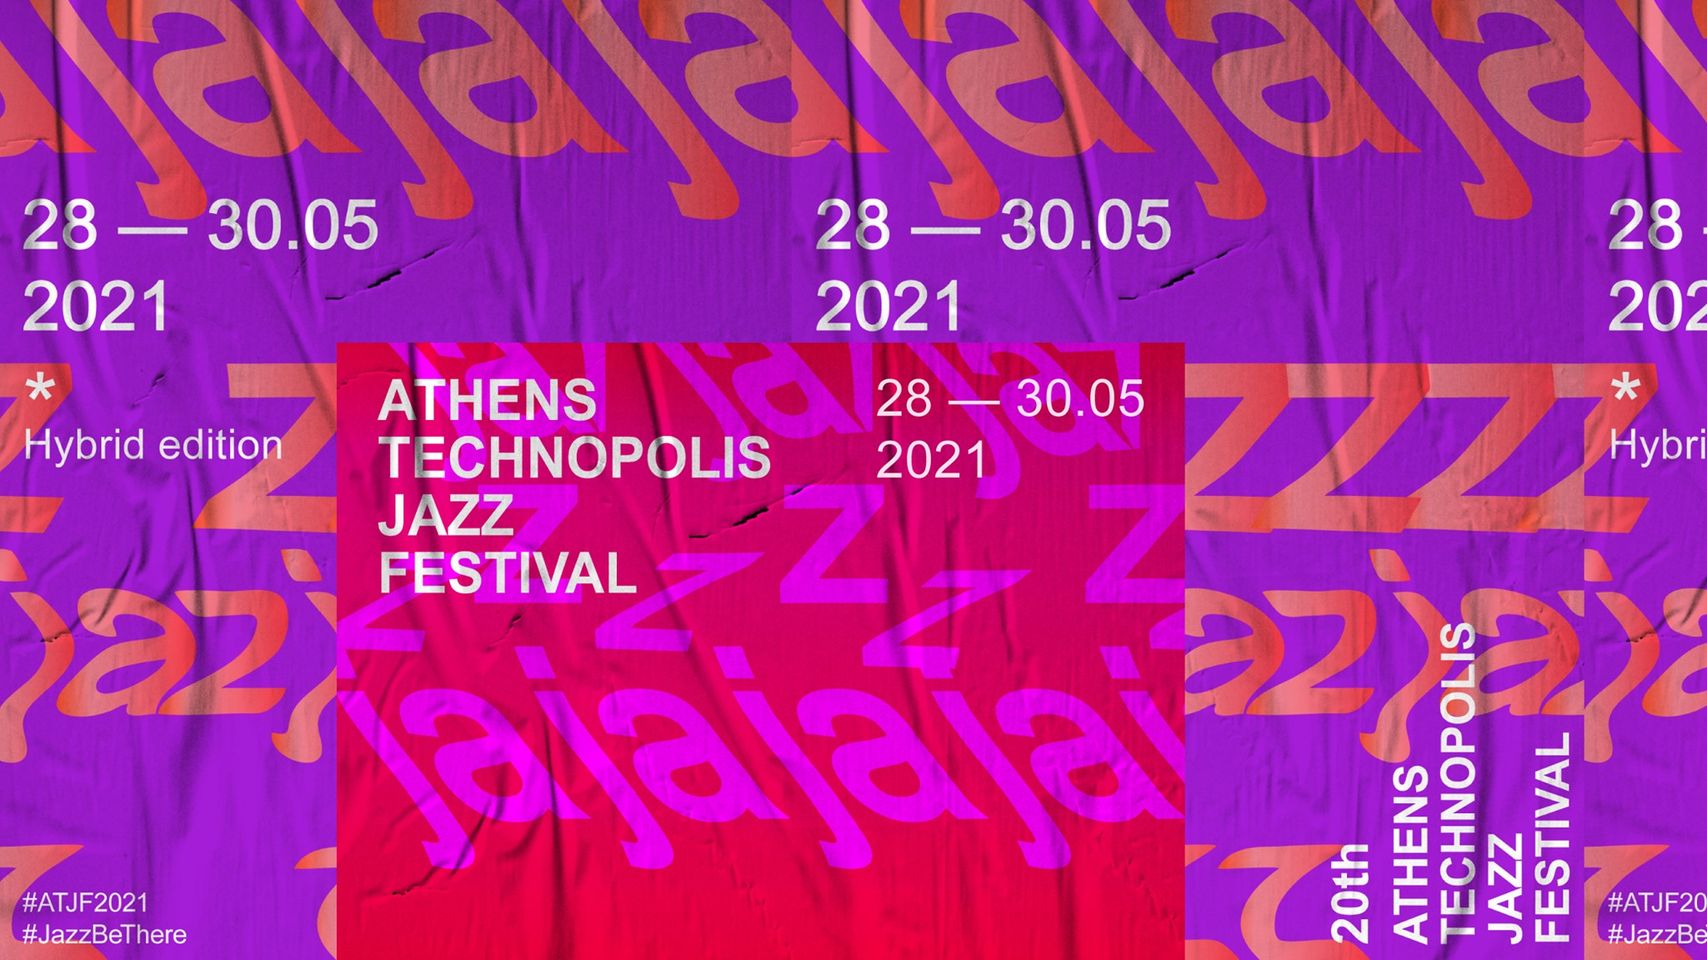 20th Athens Technopolis Jazz Festival 0 hybrid edition 2021